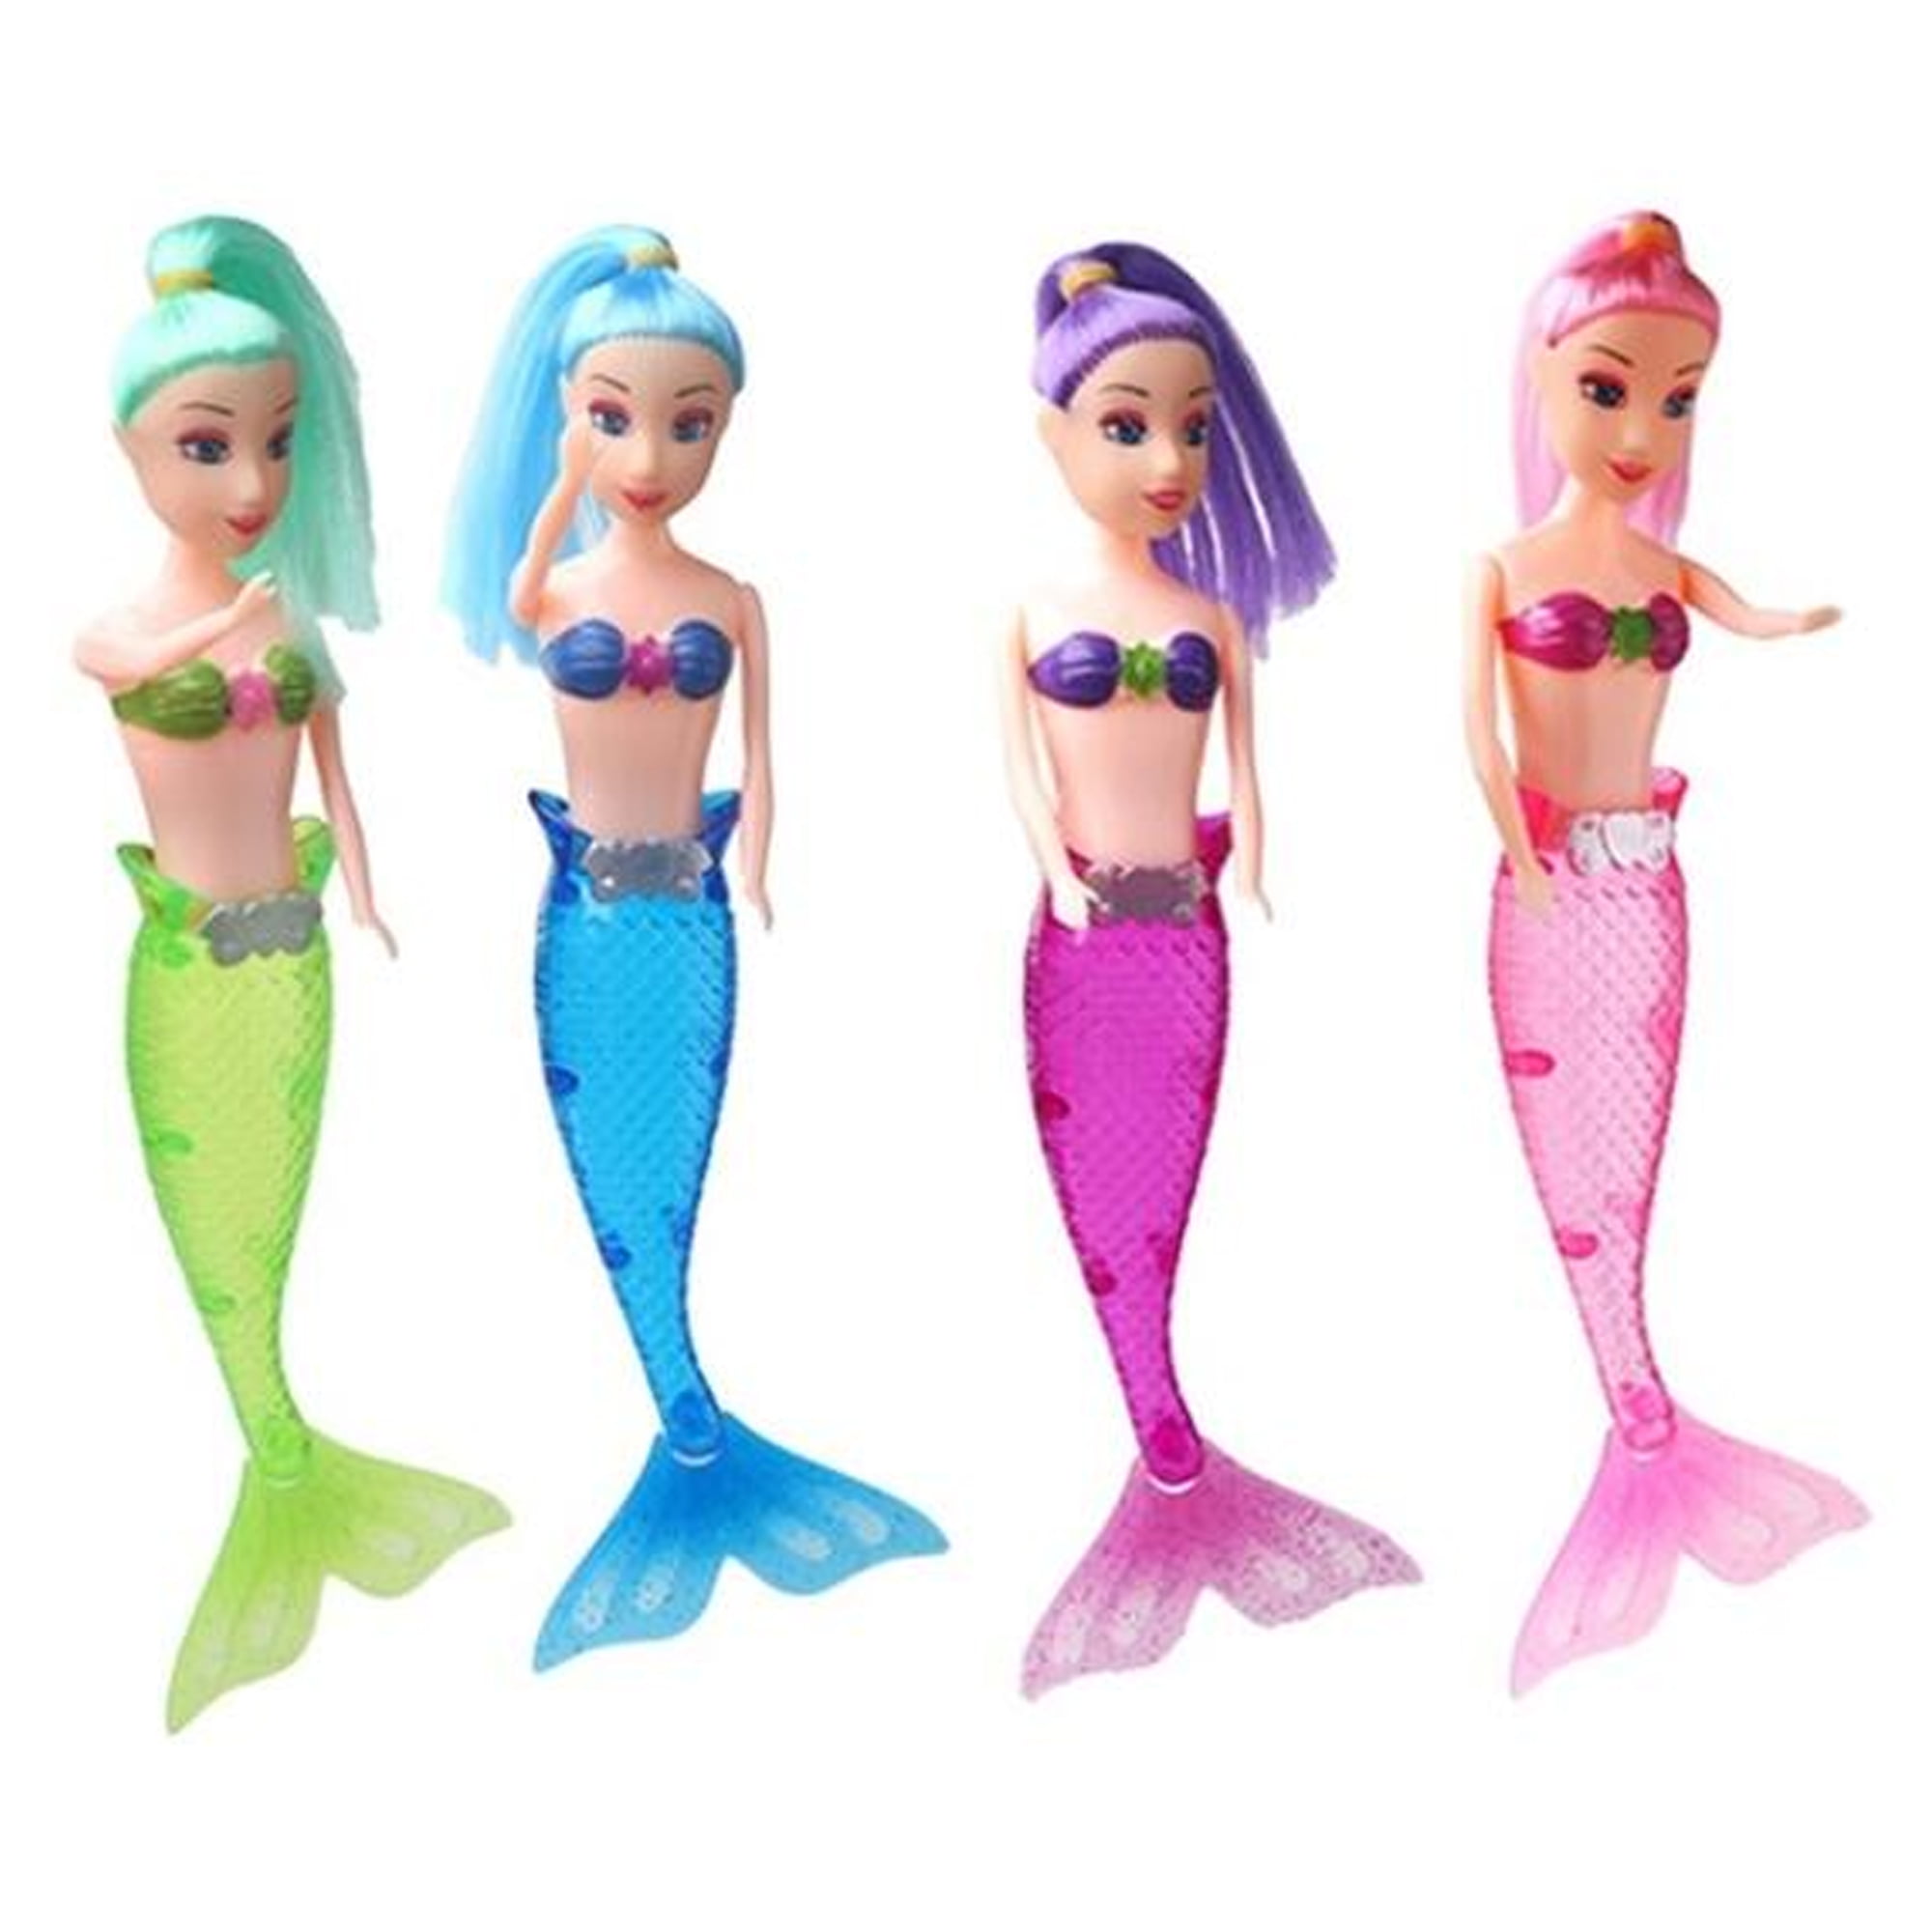 Wassery Baby Mermaid Doll Bath Toss Toy, Doll That Swims In The Bathtub